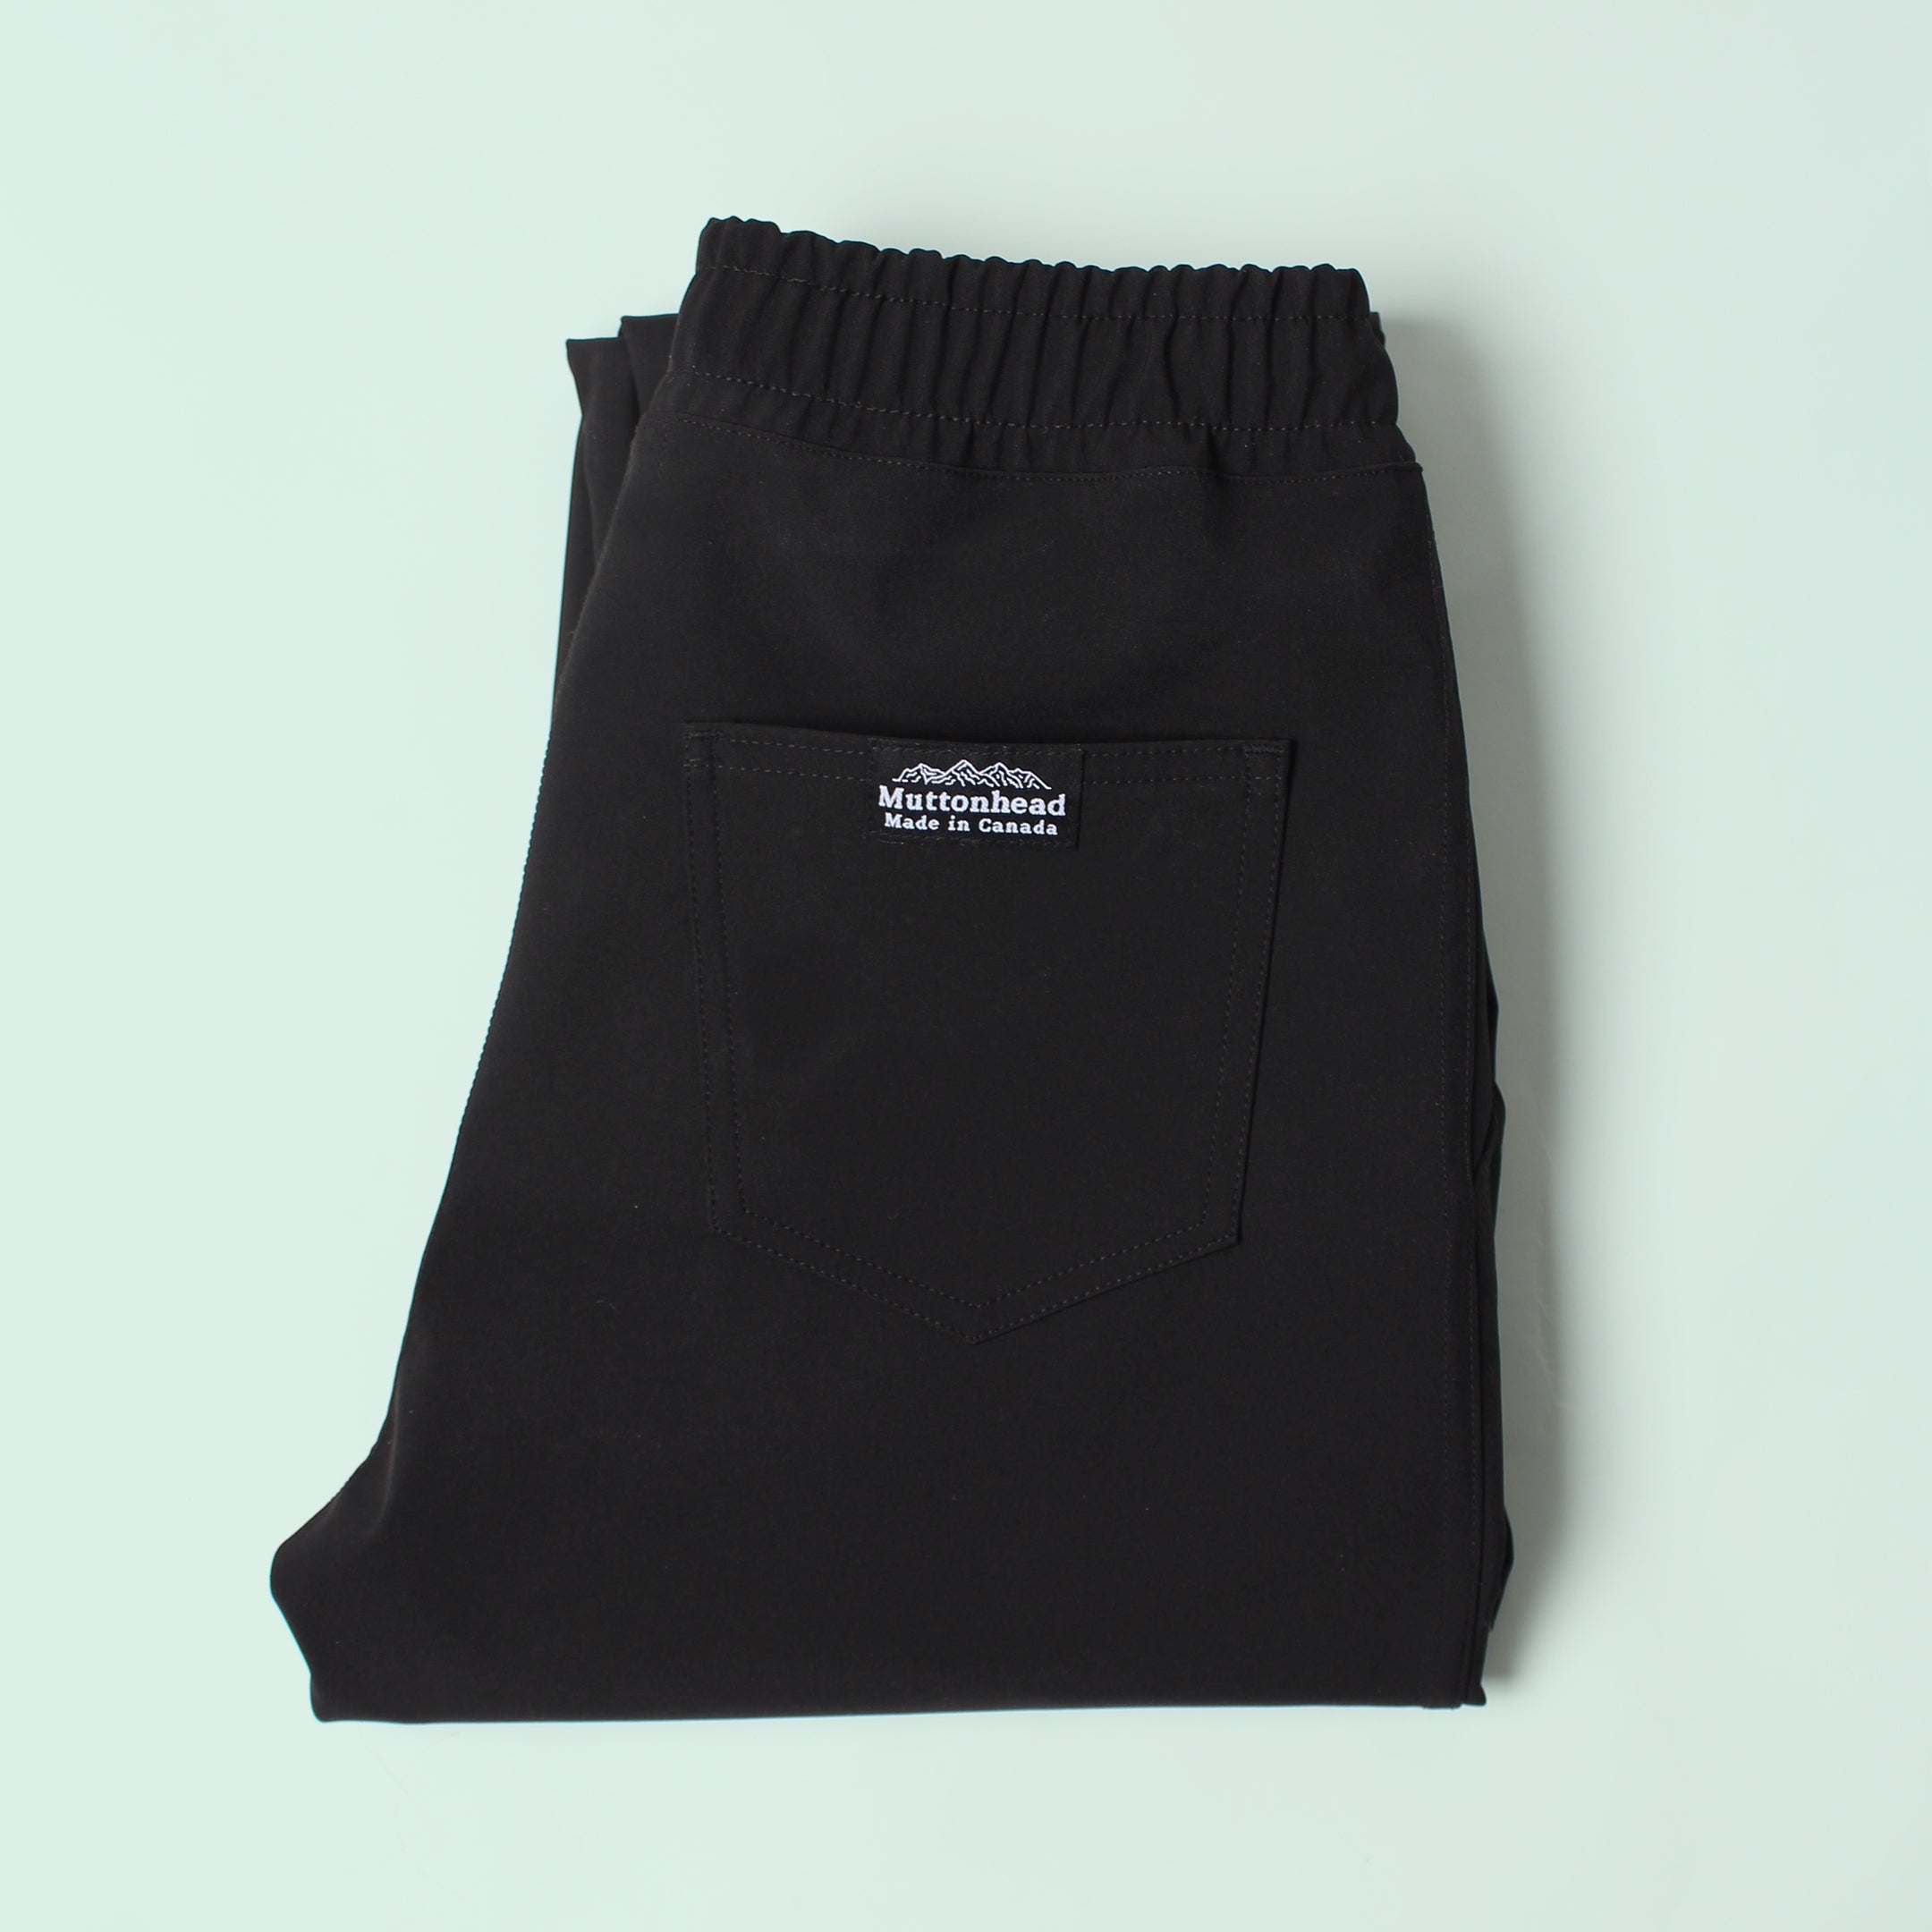 Weatherproof Easy Pant -  Lightweight Softshell Black